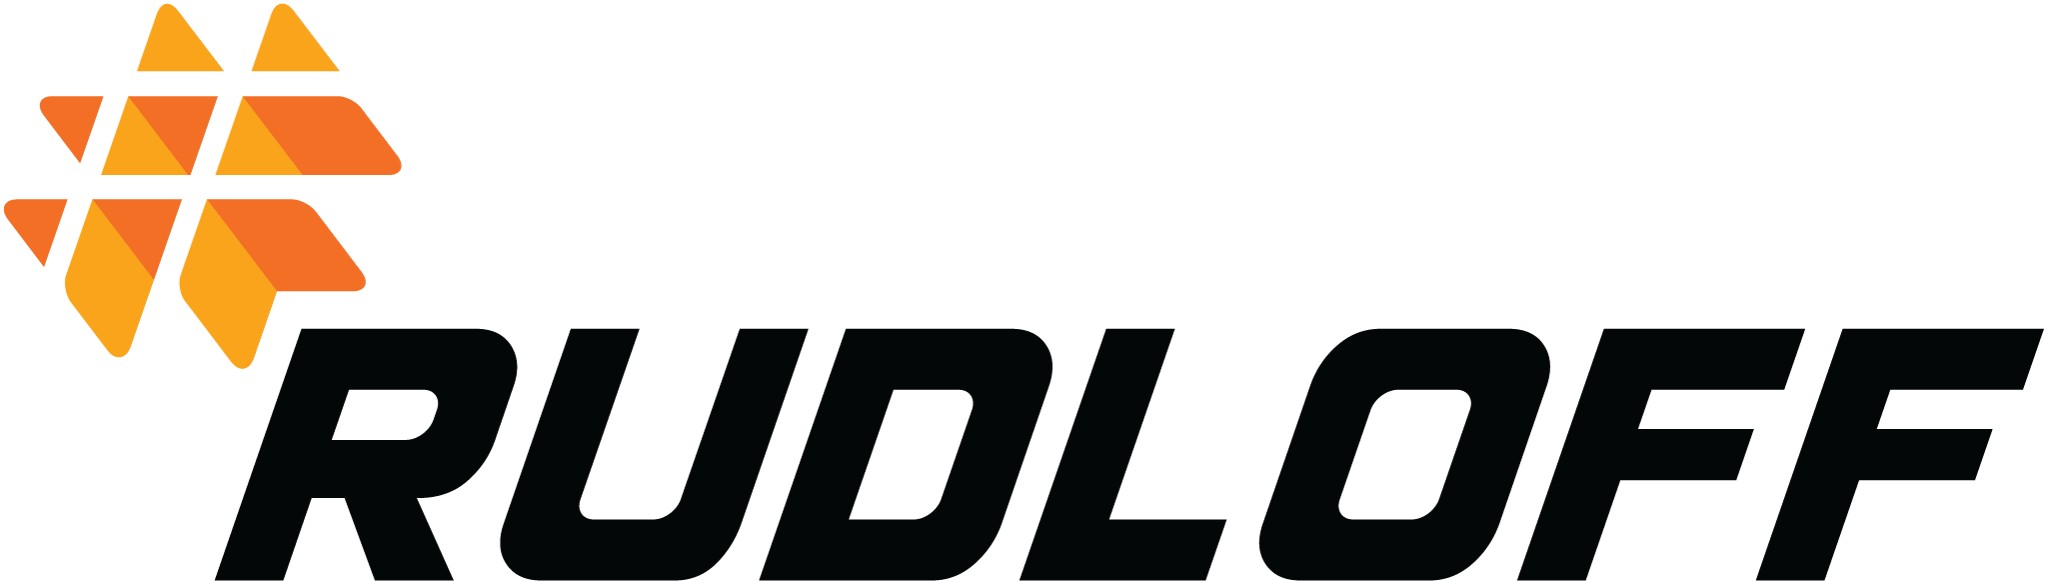 Rudloff Industrial | LinkedIn